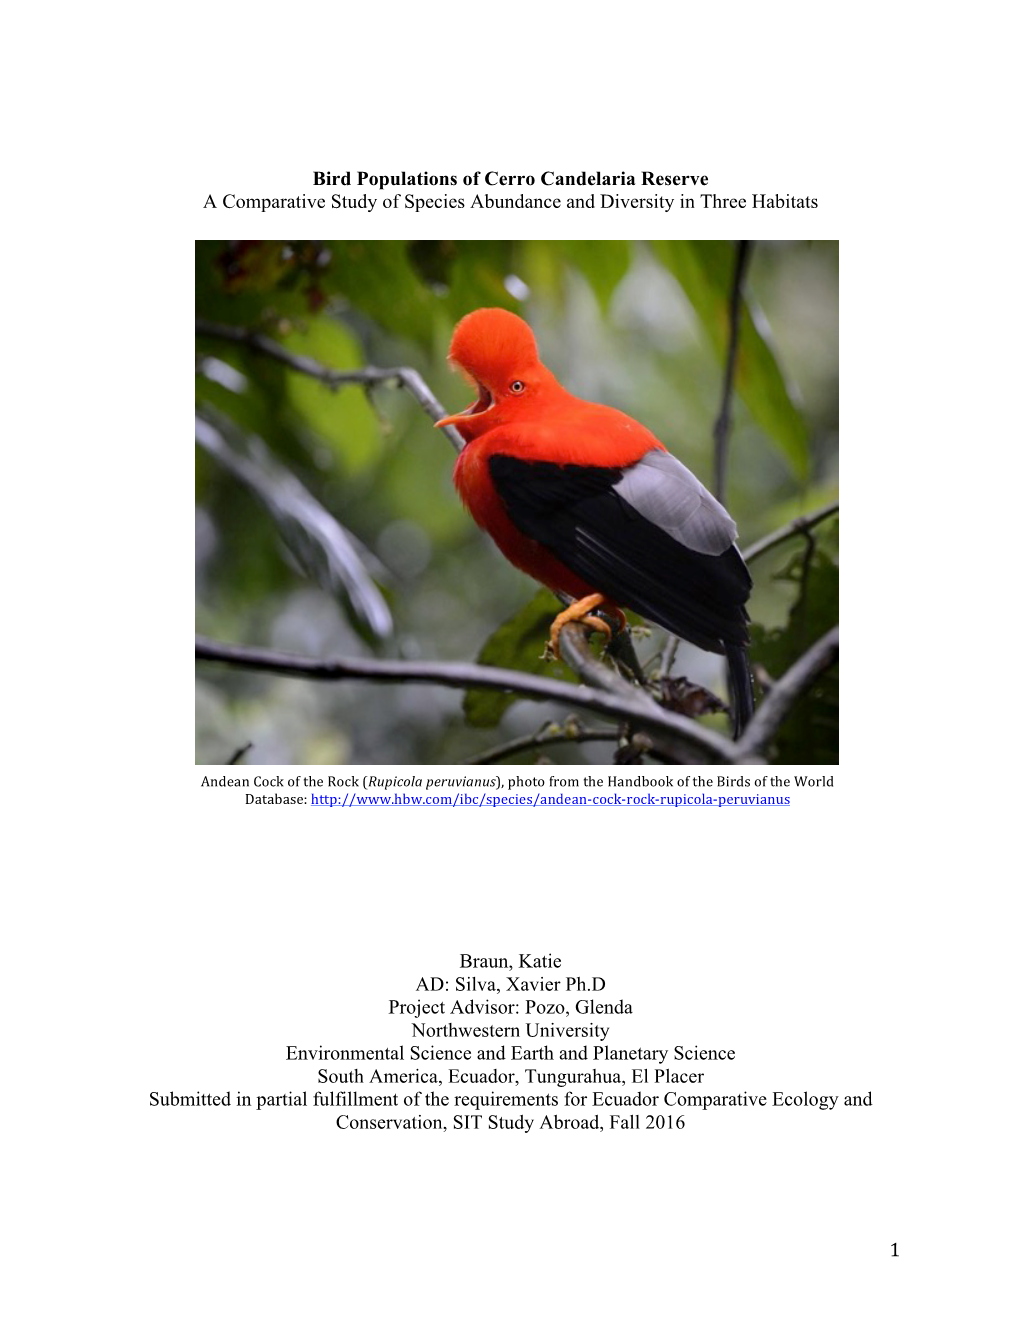 Bird Populations of Cerro Candelaria Reserve a Comparative Study of Species Abundance and Diversity in Three Habitats